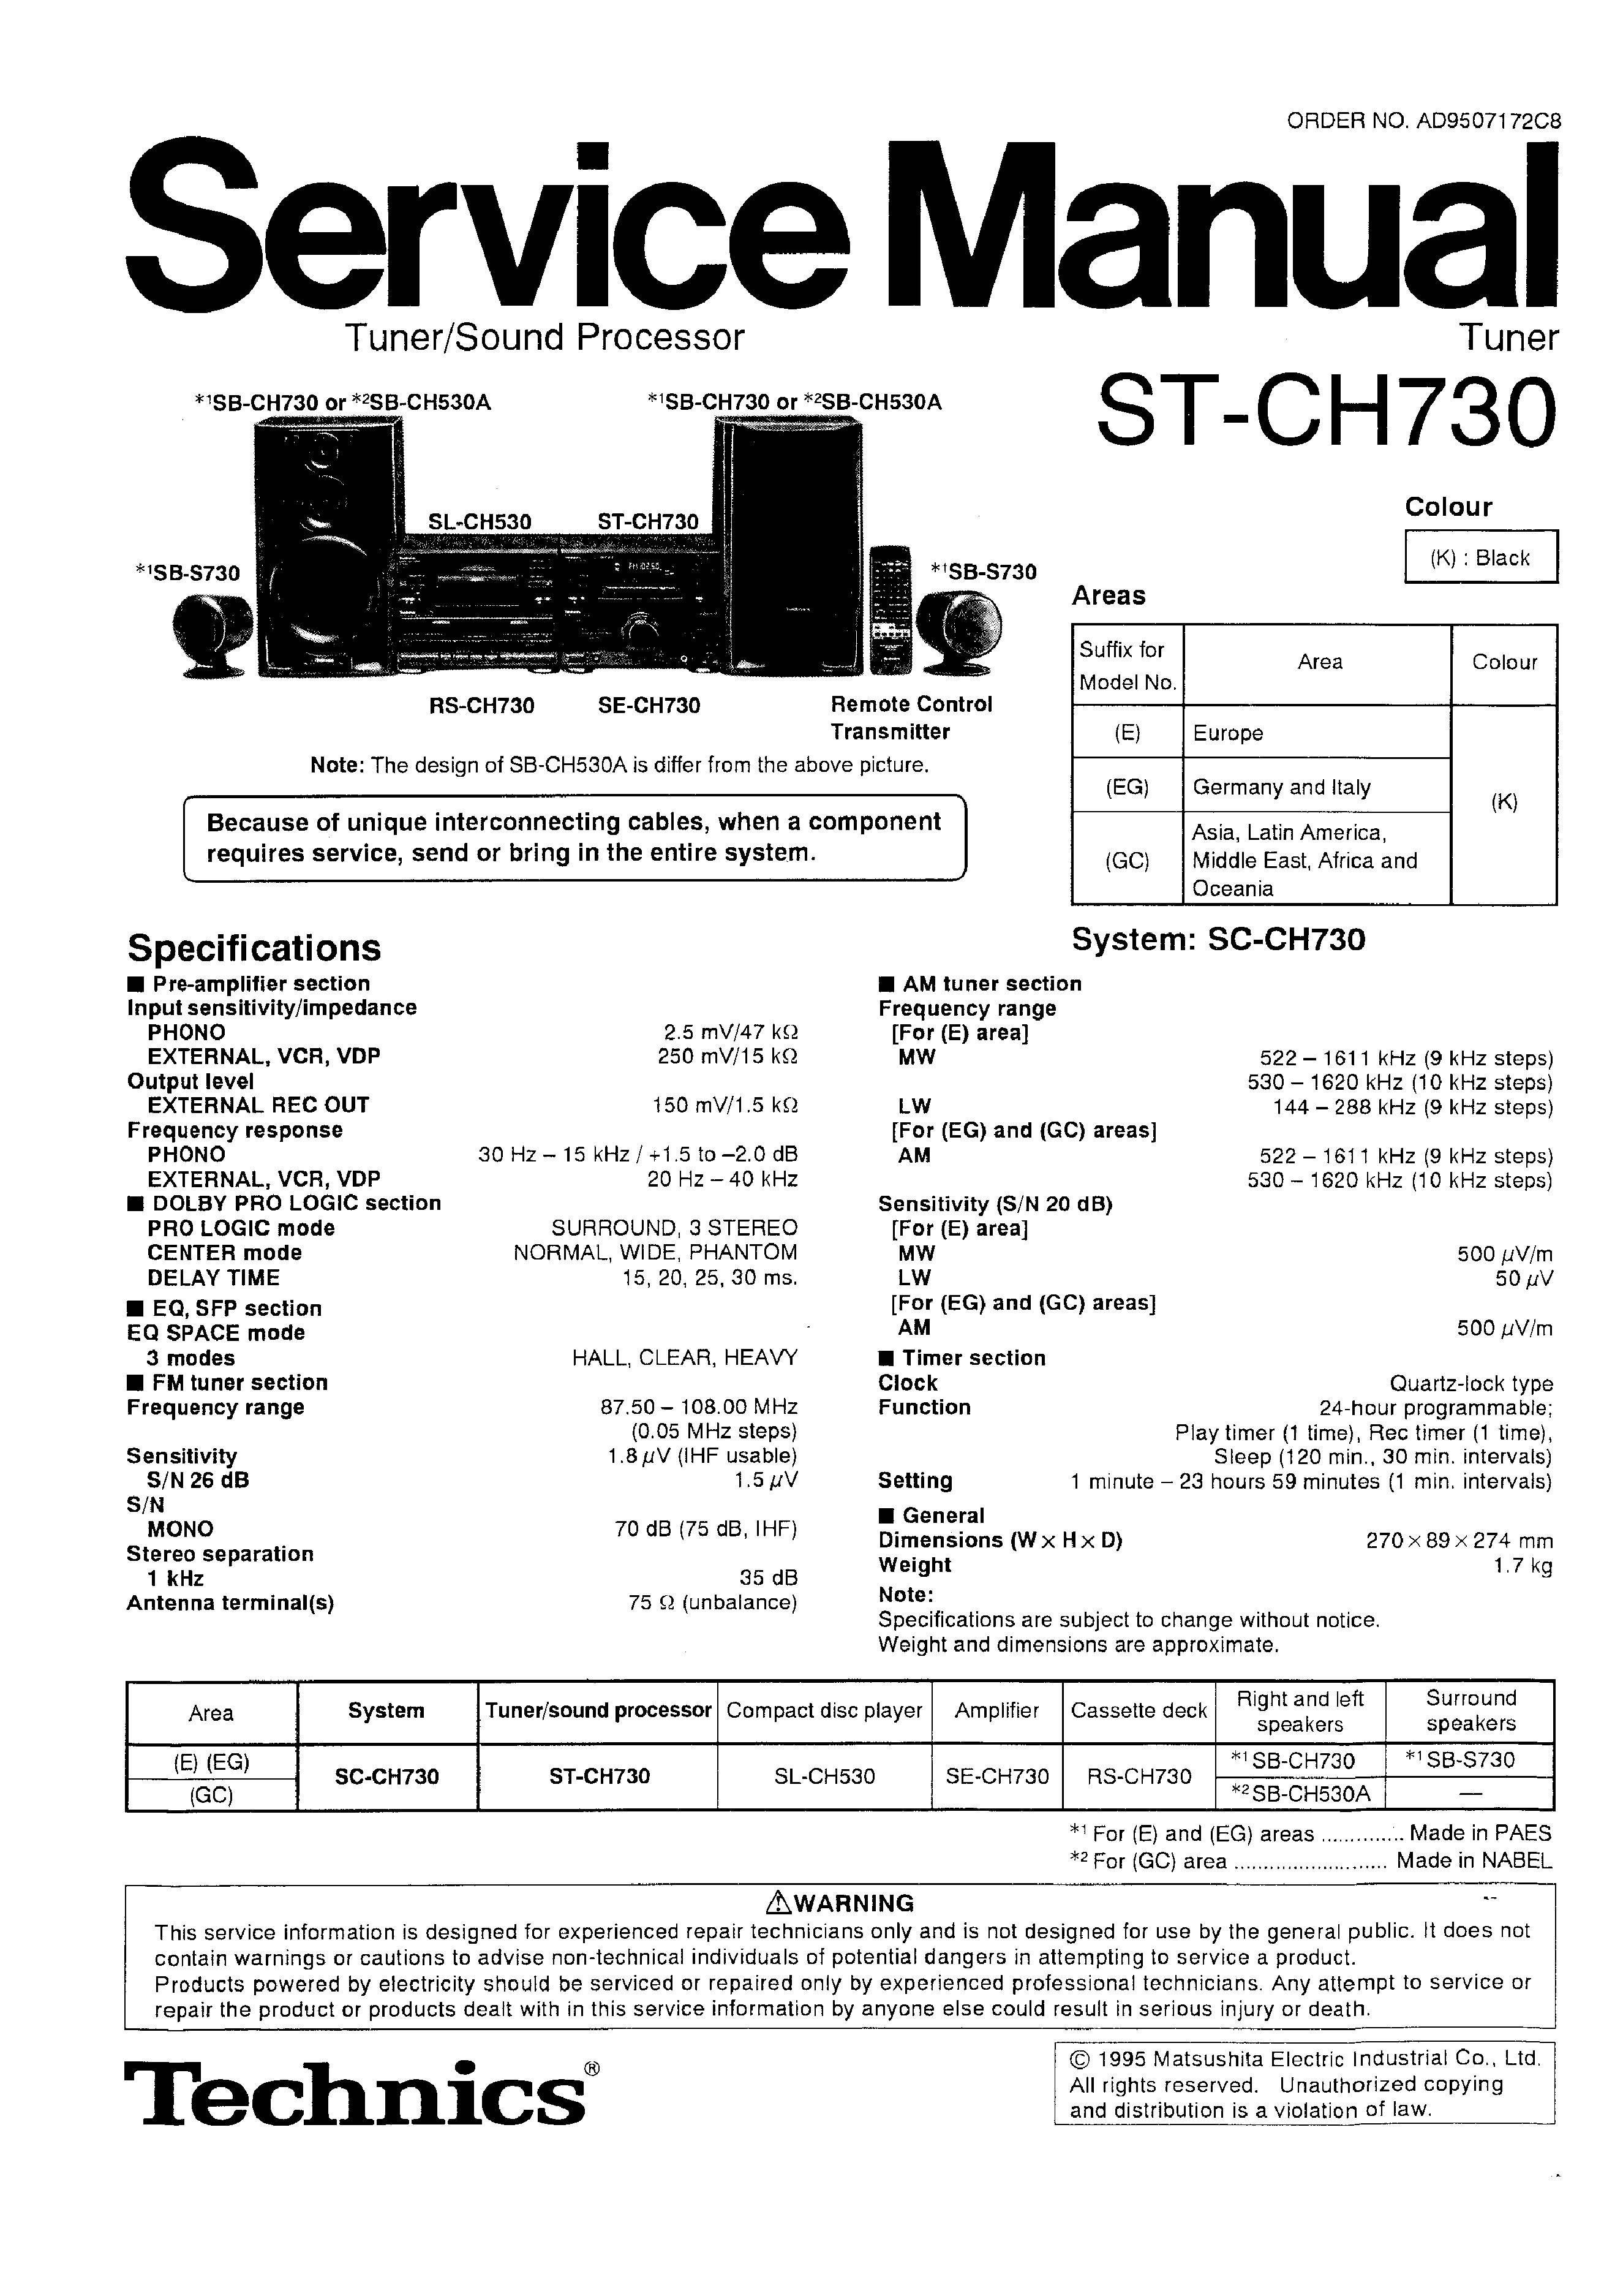 Technics ST-CH730